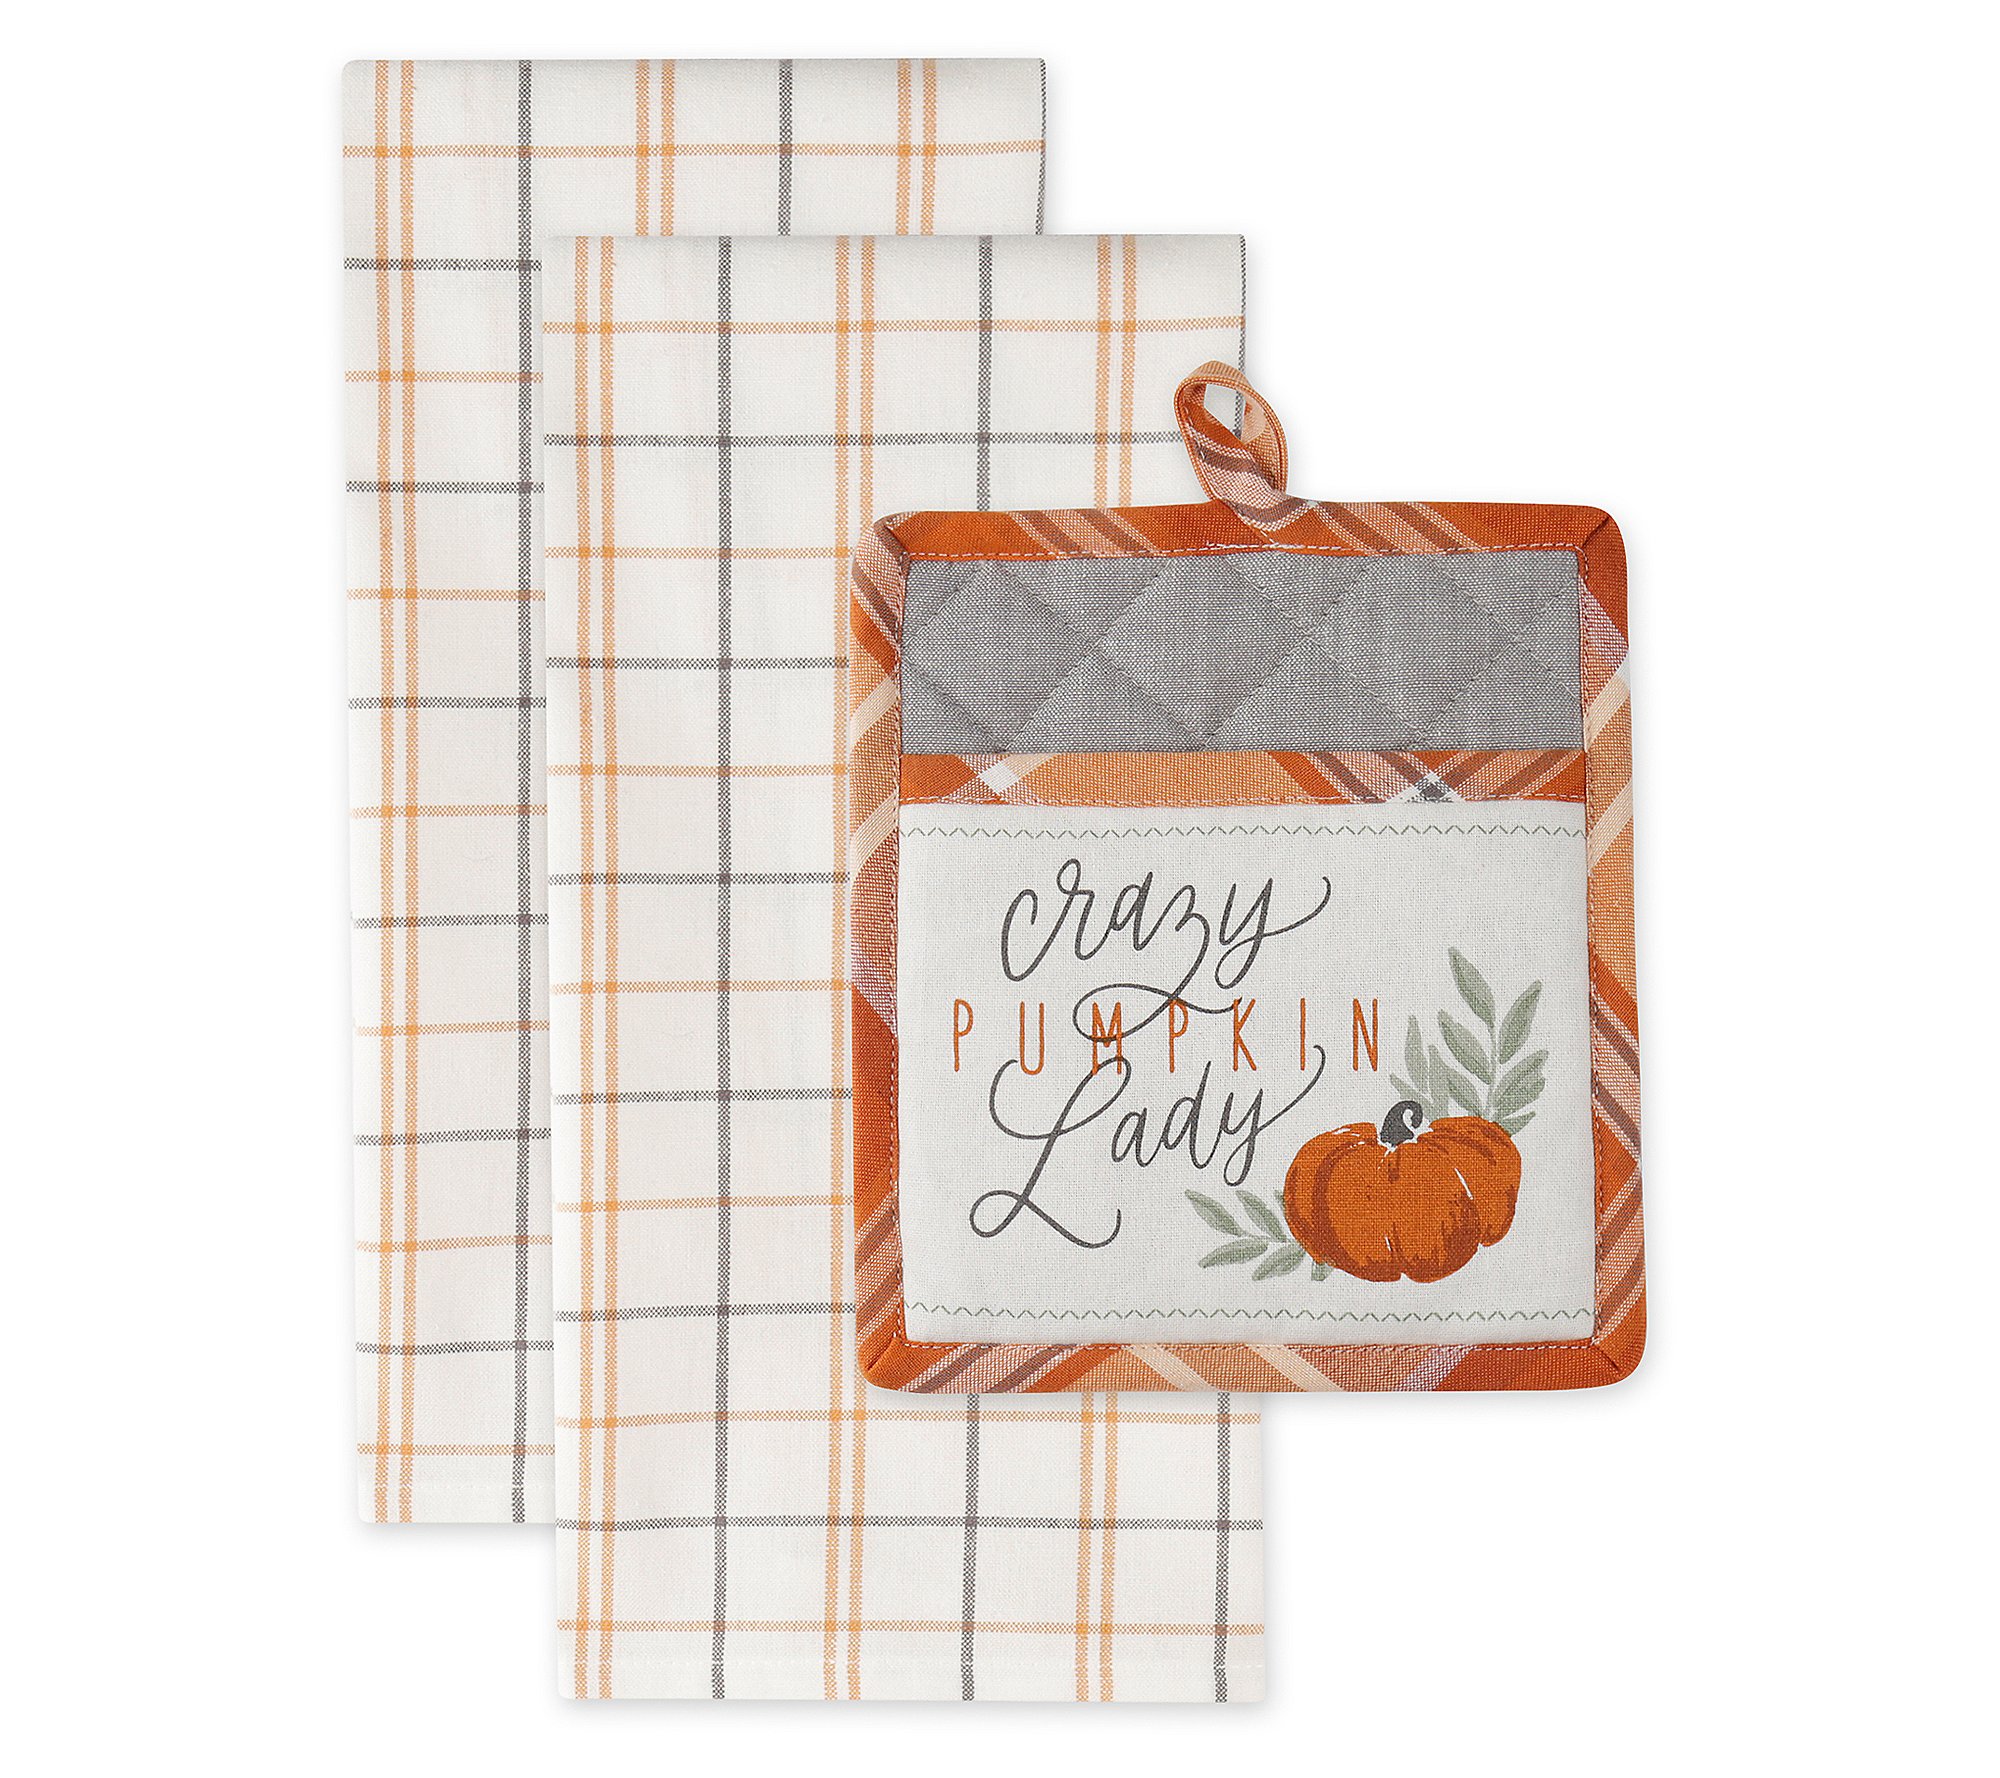 Design Imports Crazy Pumpkin Lady Kitchen Gift Set